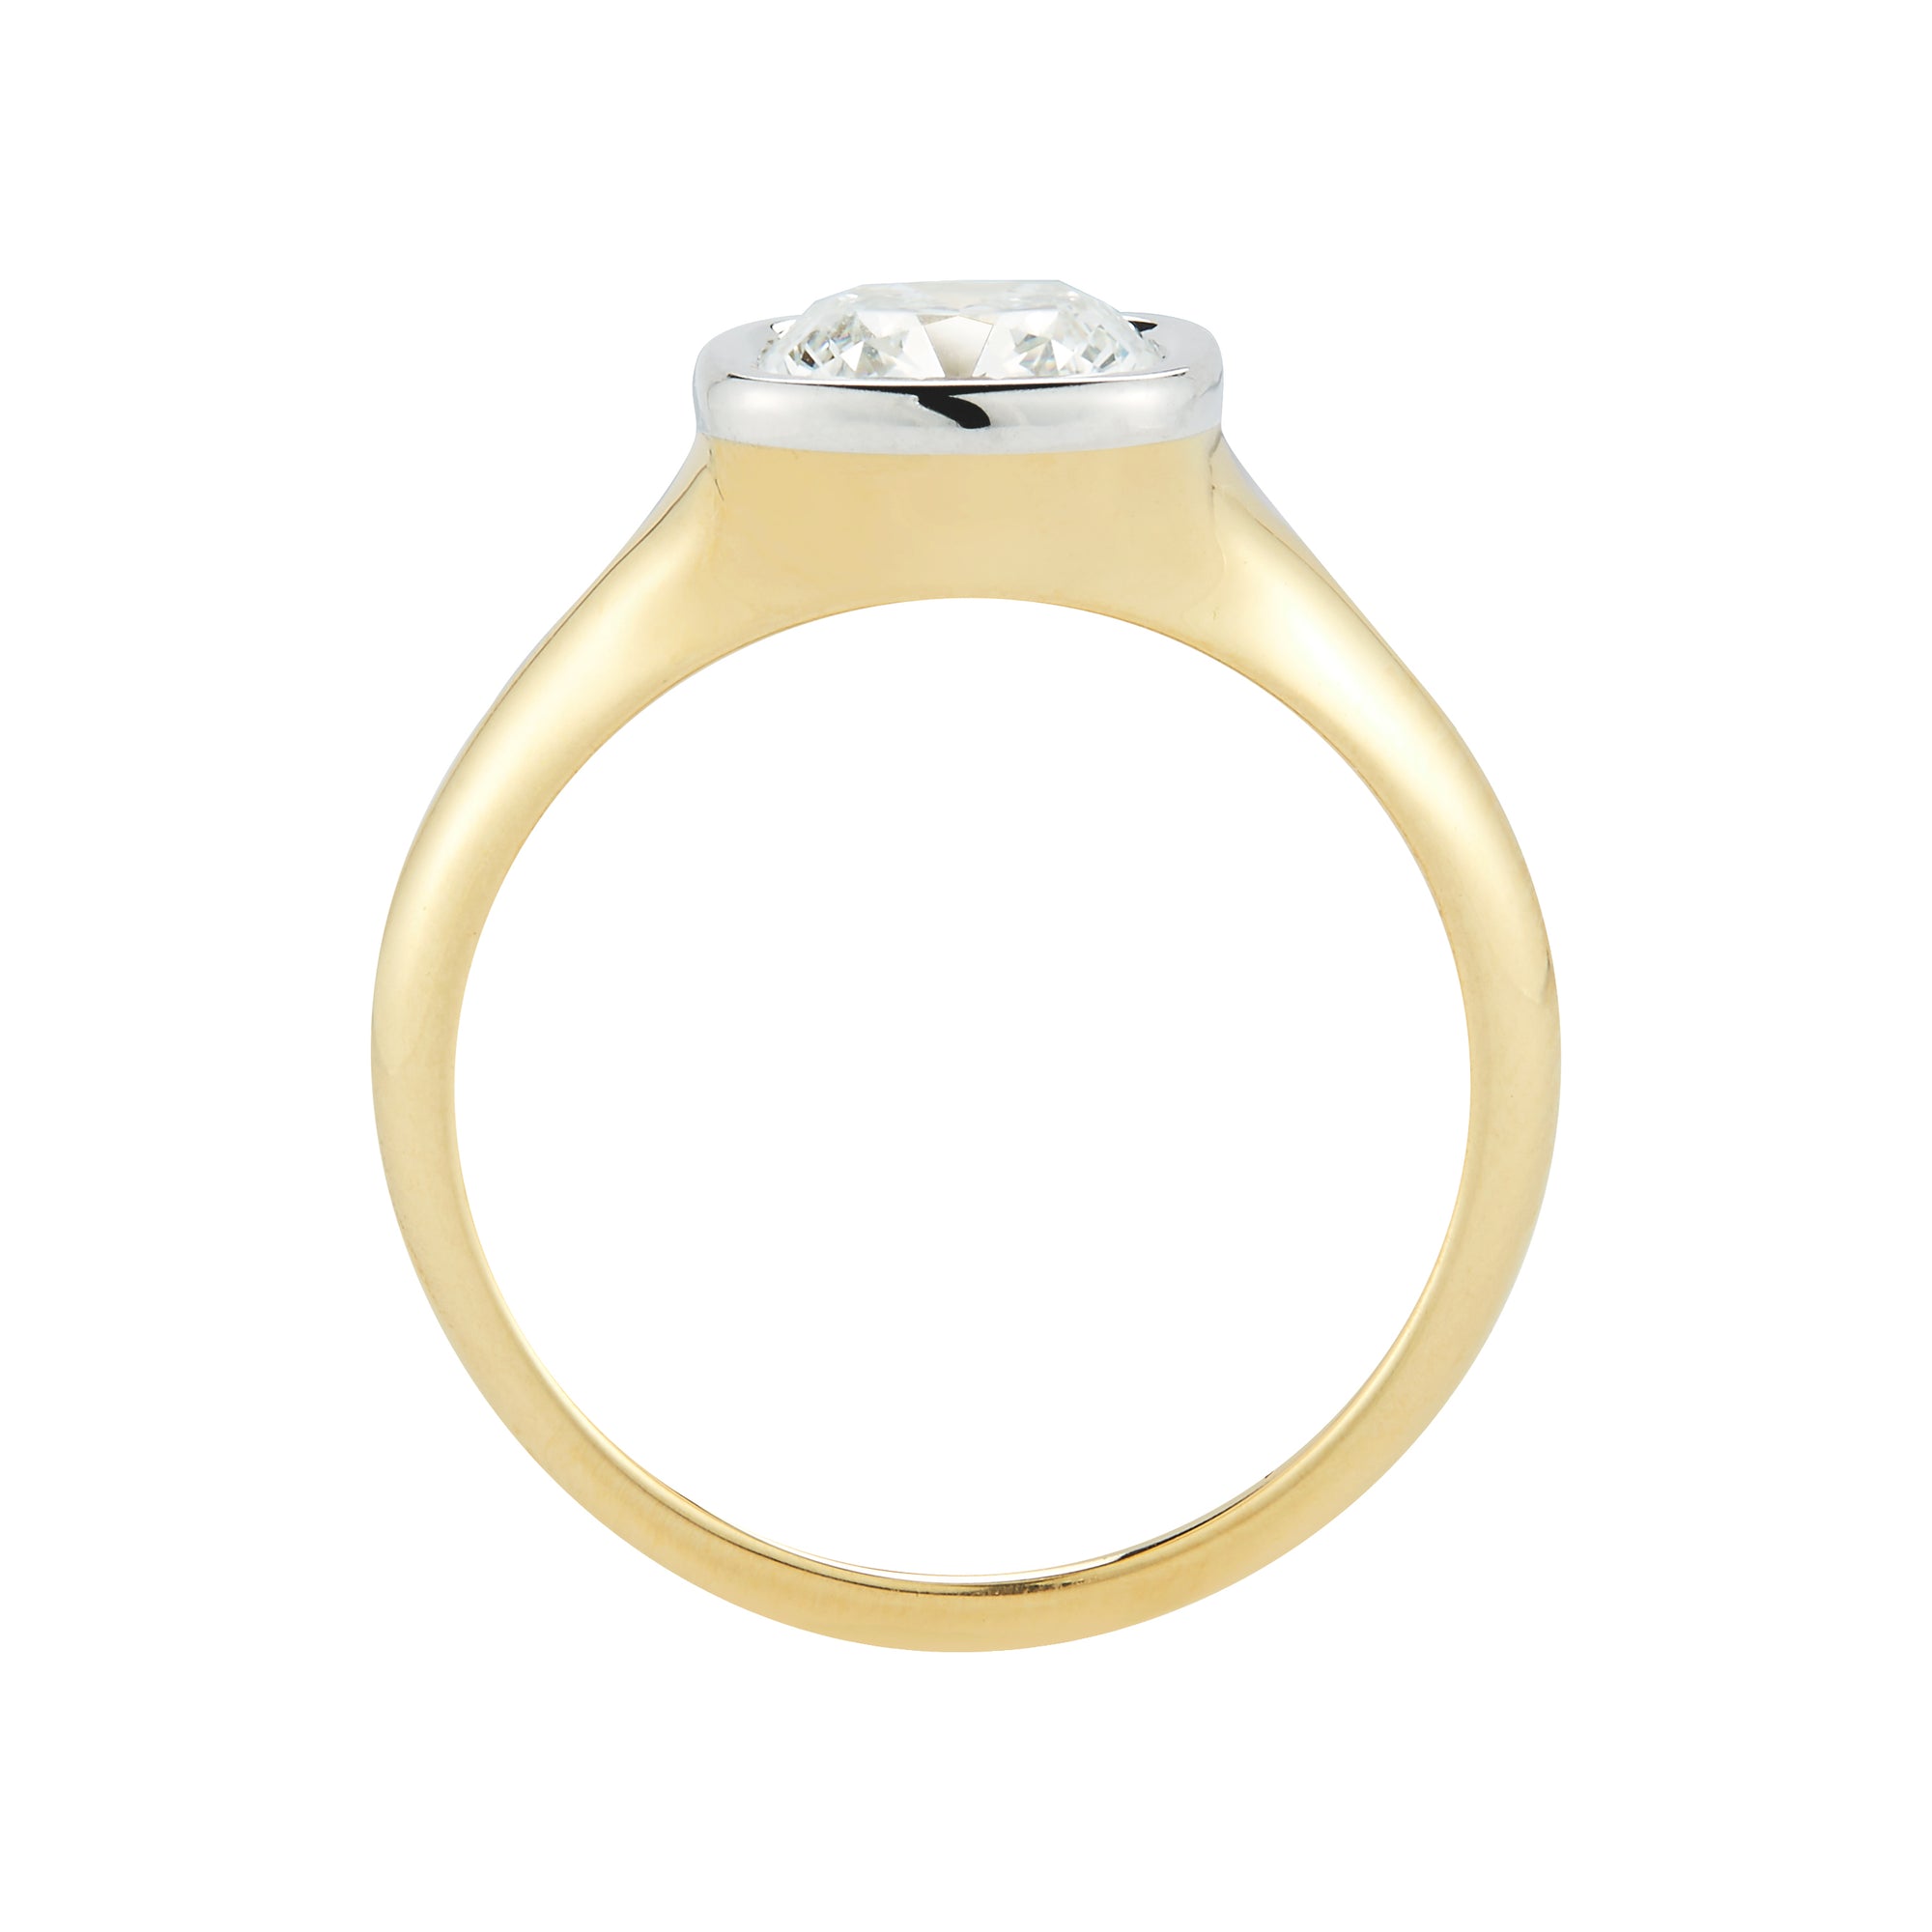 cushion cut diamond engagement ring finn jewelry by Candice Pool Neistat